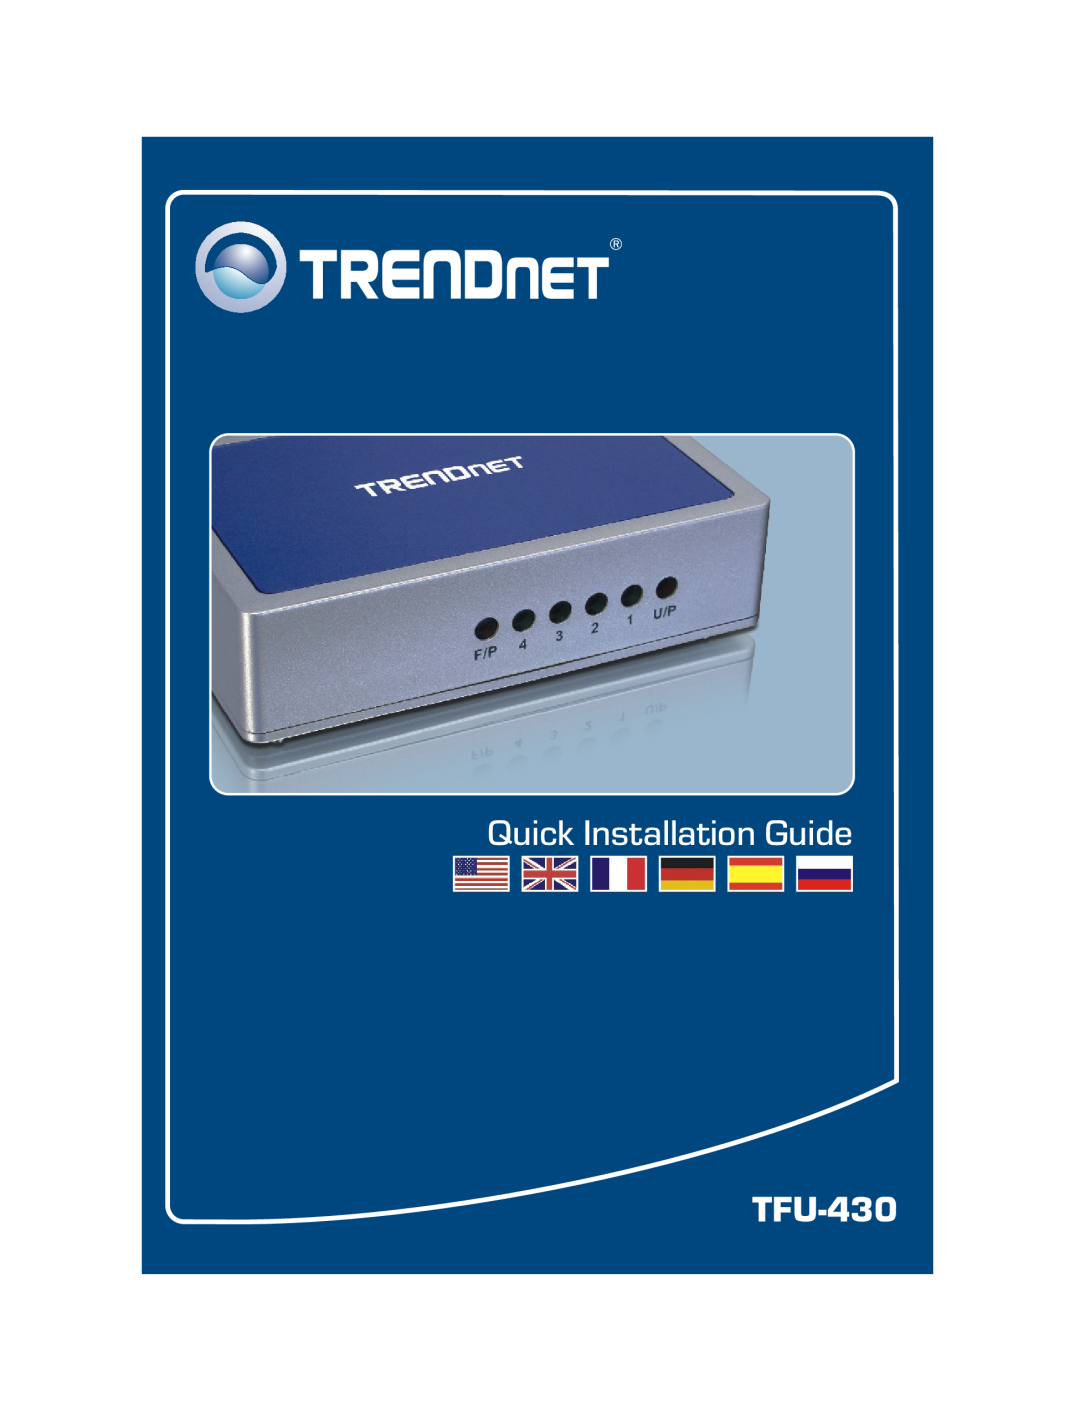 TRENDnet TFU-430 manual Quick Installation Guide 